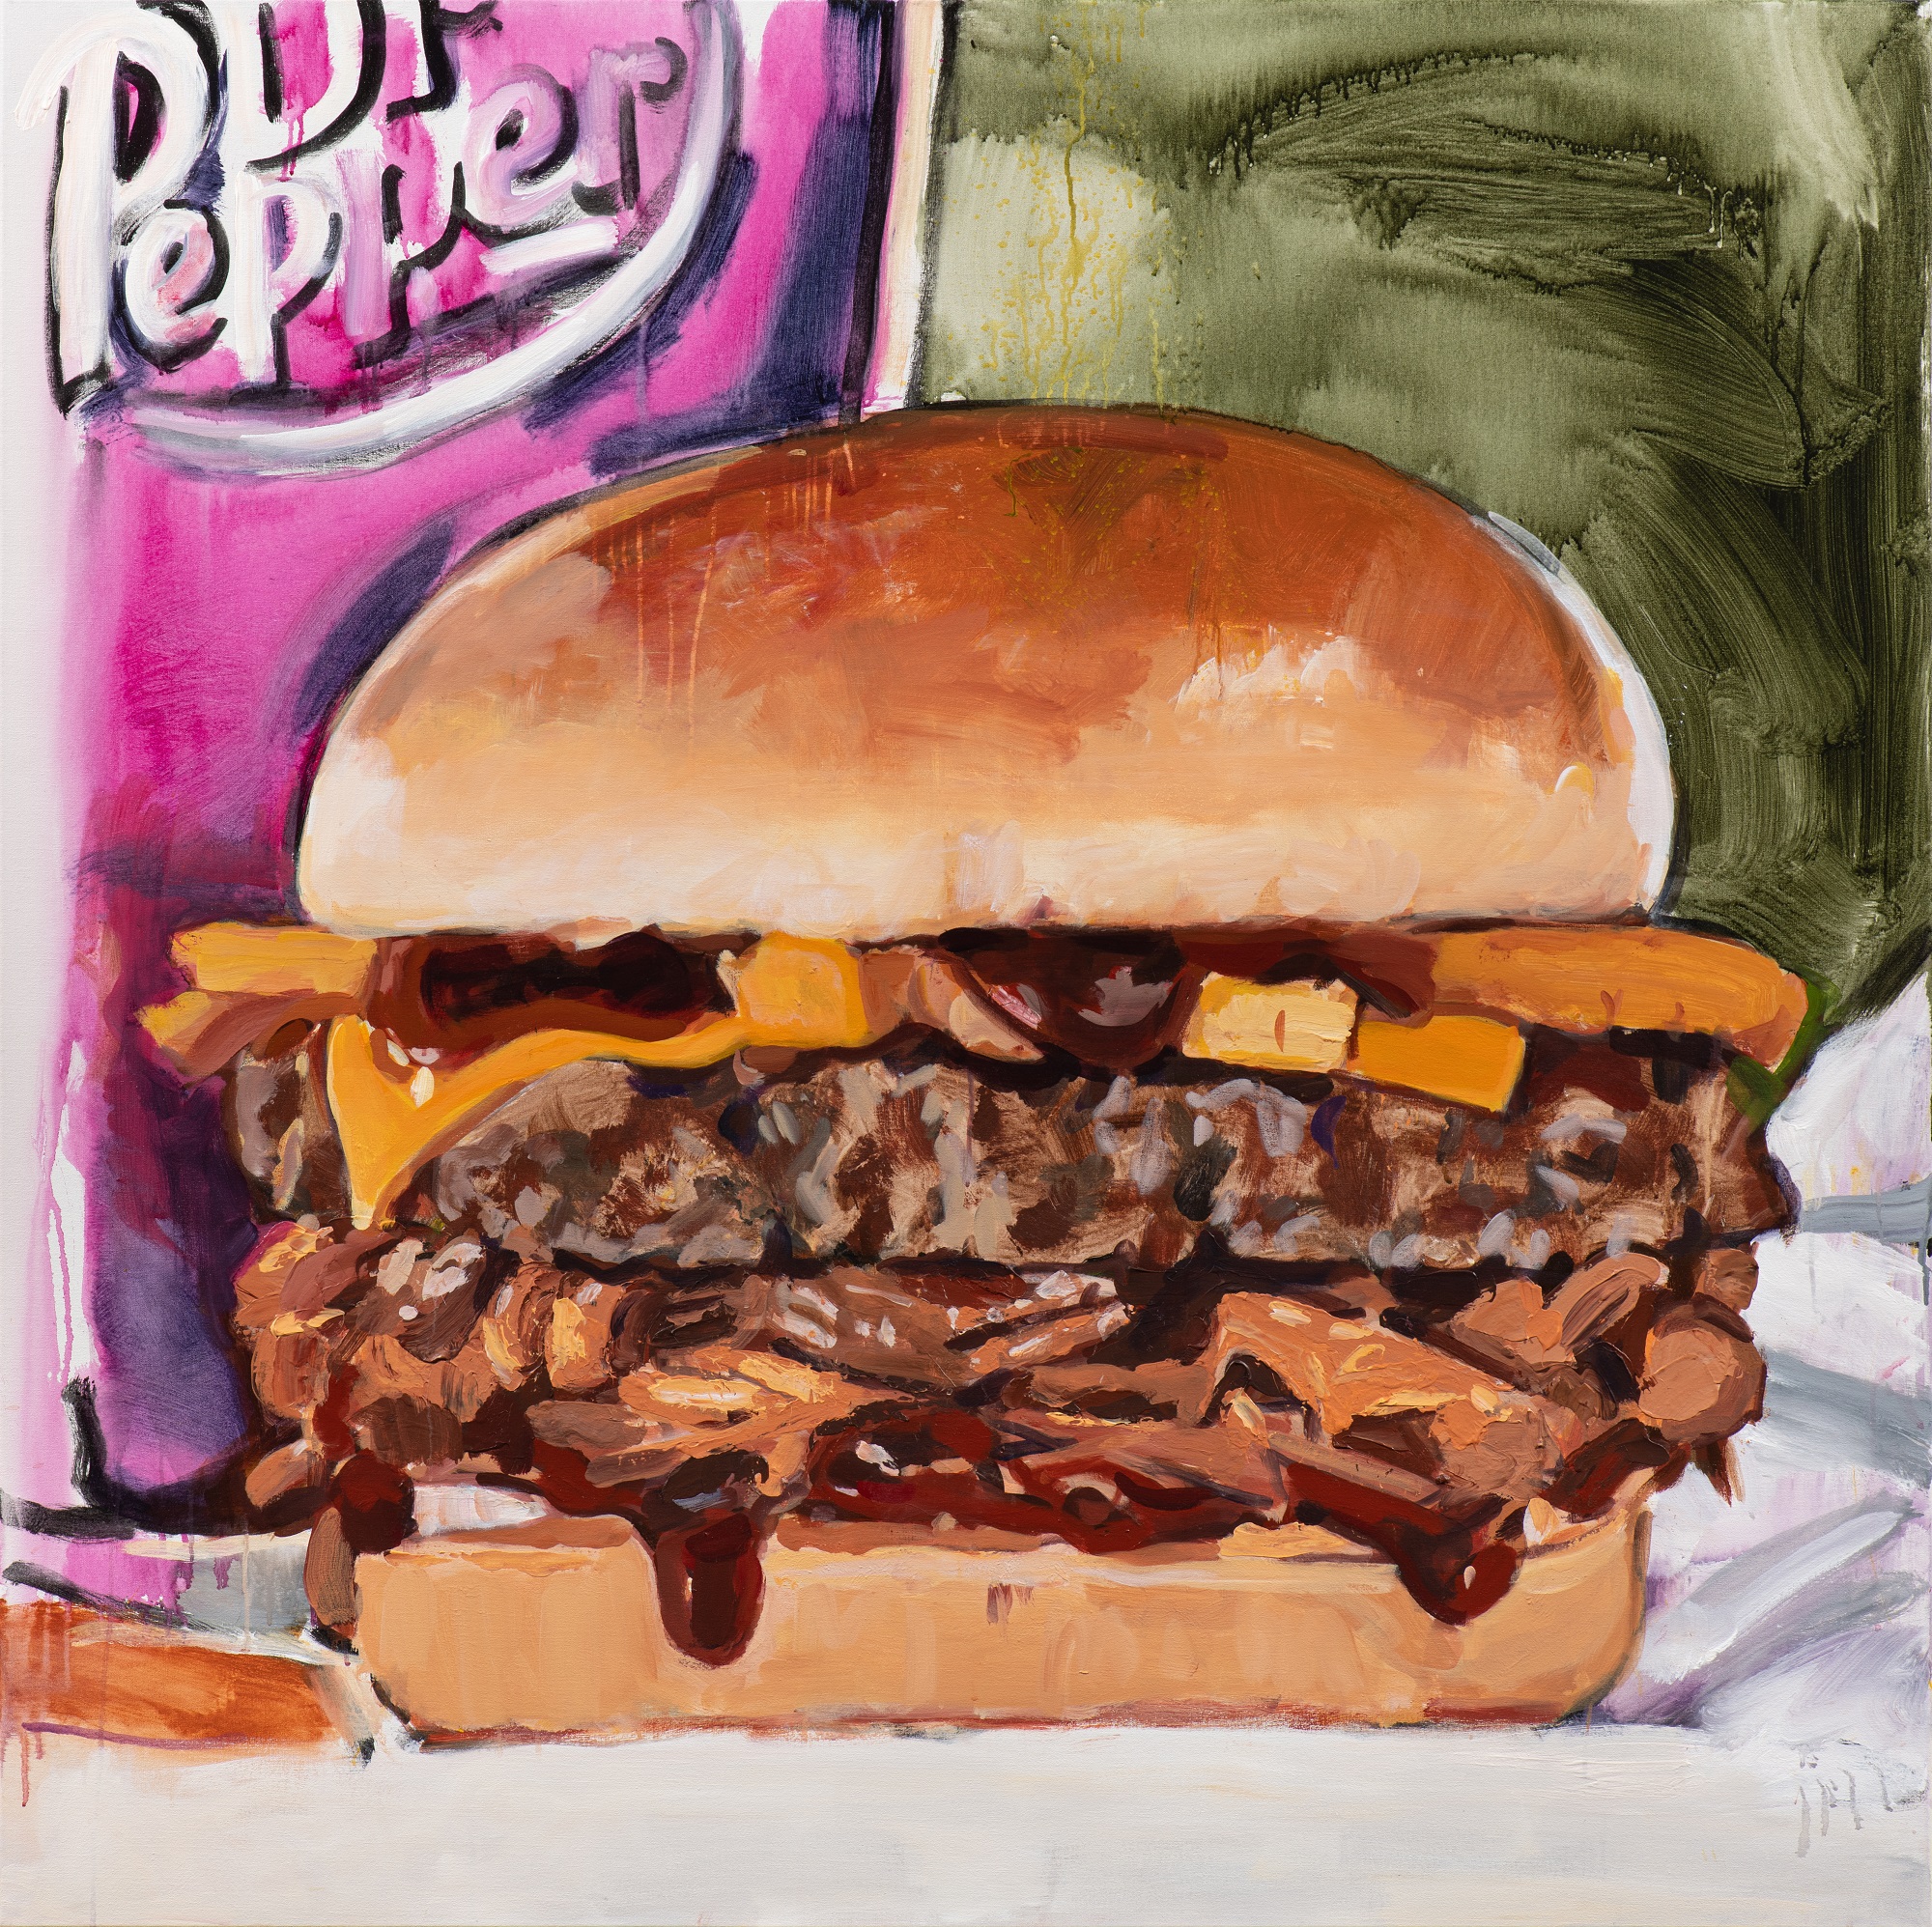 Carl's Jr. Pulled Pork Memphis BBQ Burger